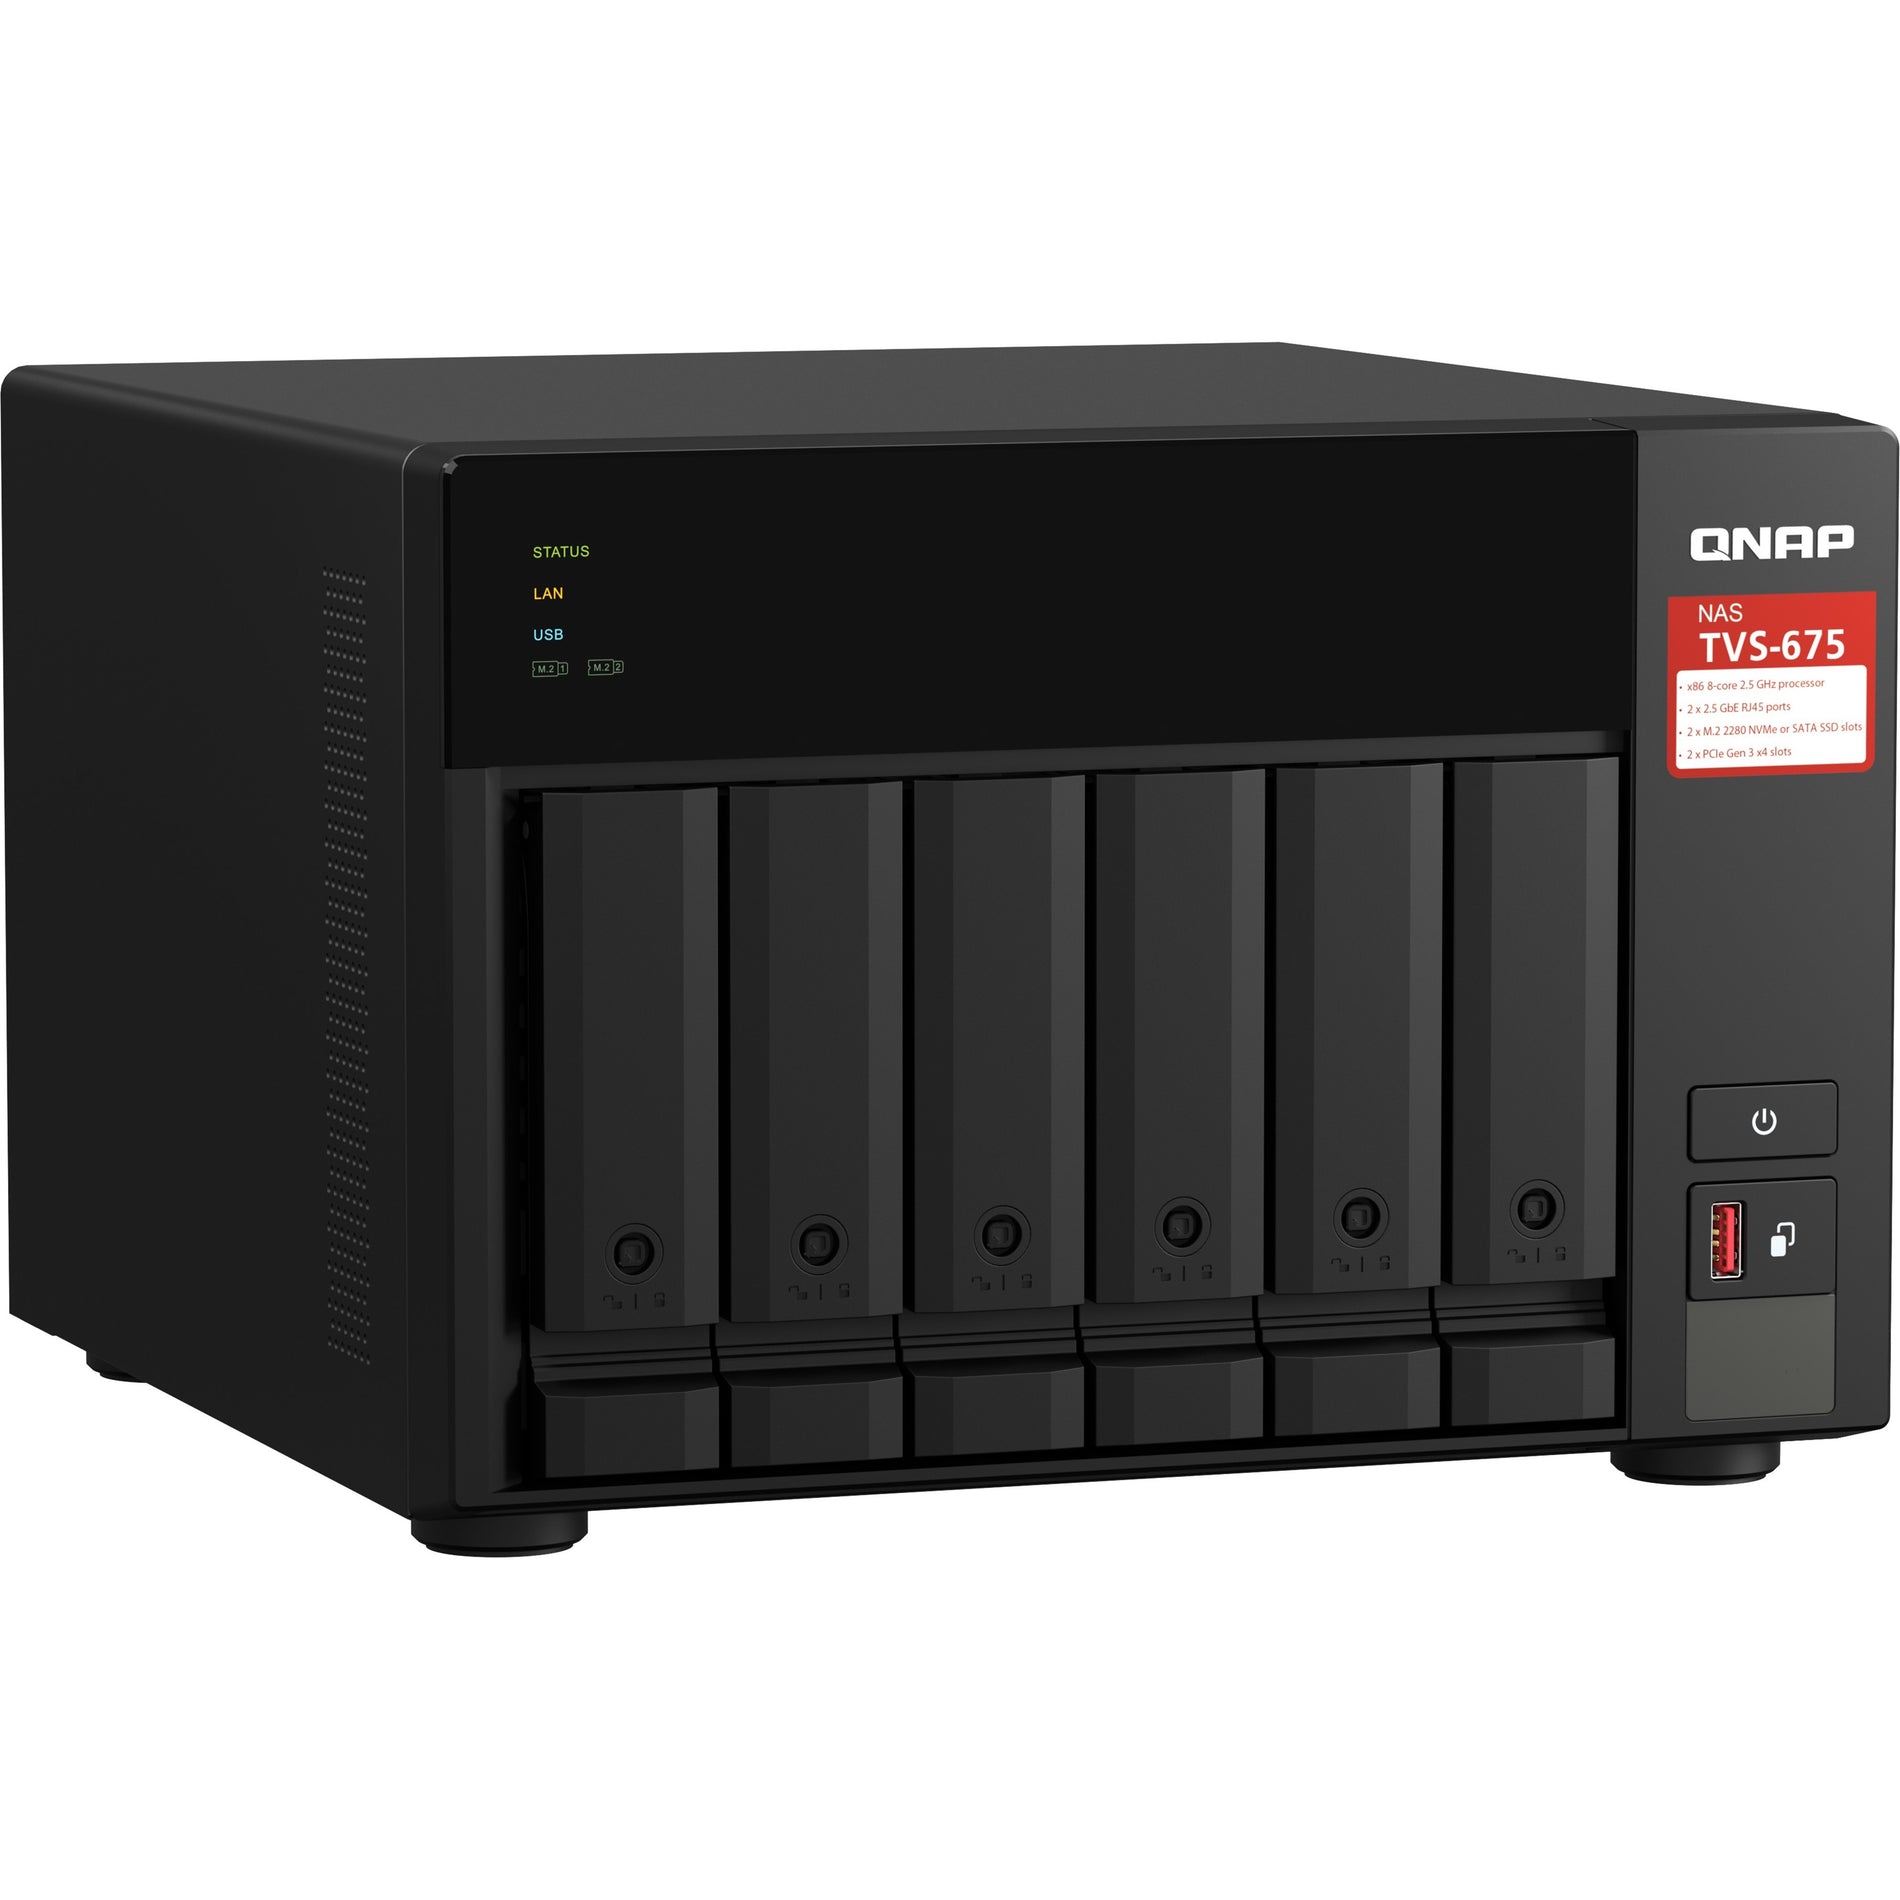 QNAP TVS-675-8G-US TVS-675 SAN/NAS Storage System, High-Performance Storage Solution